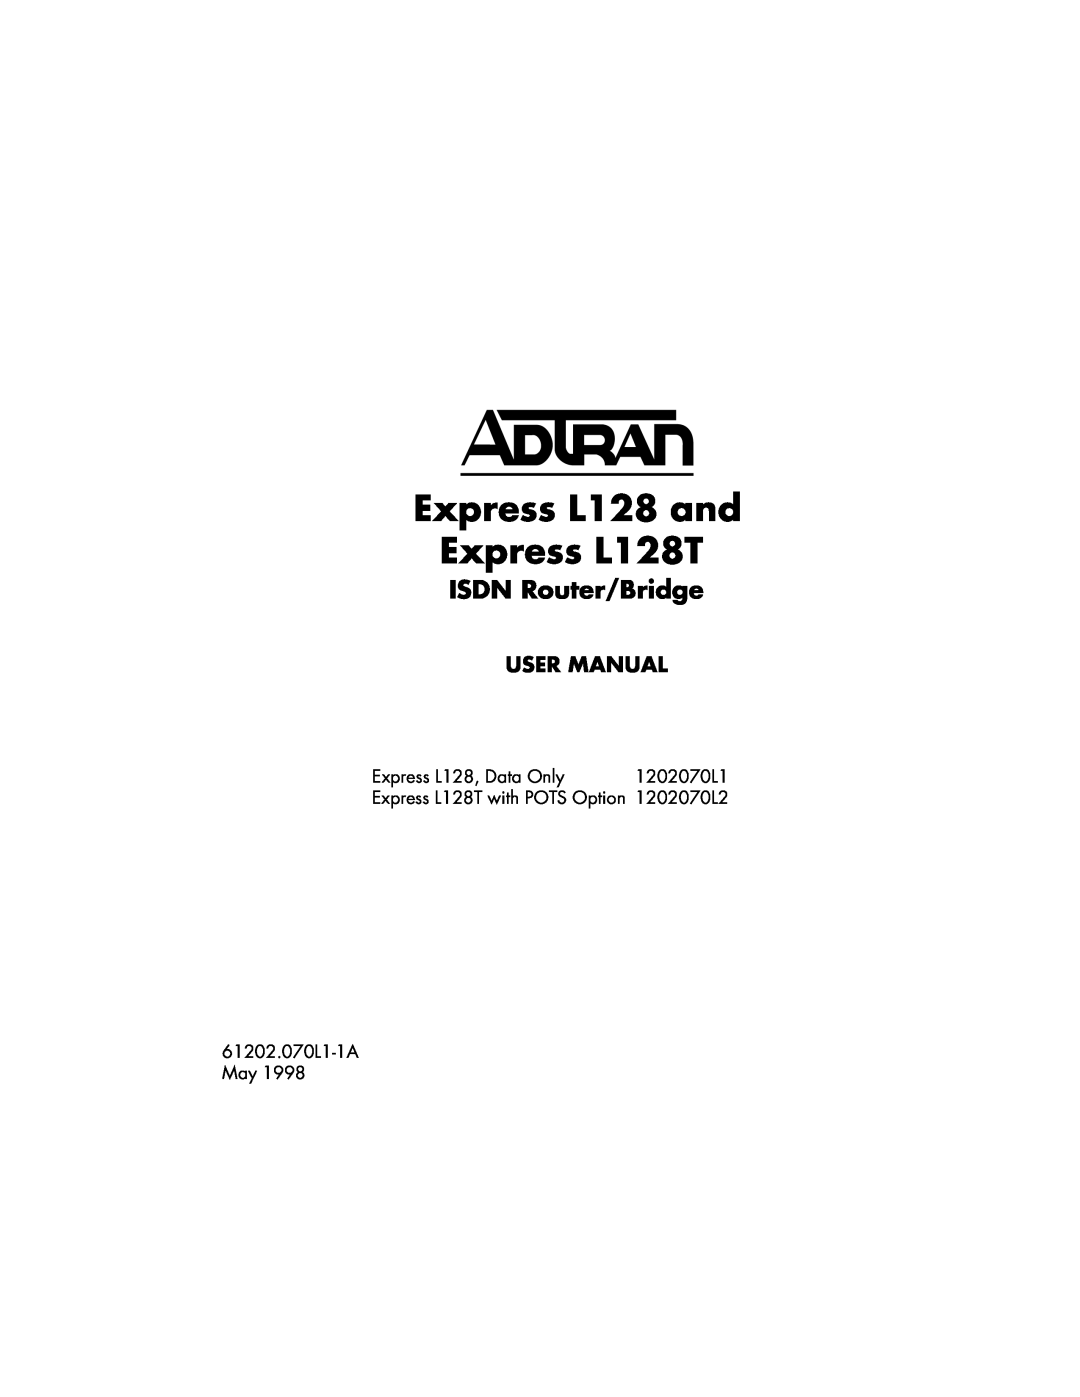 ADTRAN user manual User Manual, Express L128 and Express L128T, ISDN Router/Bridge, Express L128, Data Only, 1202070L1 